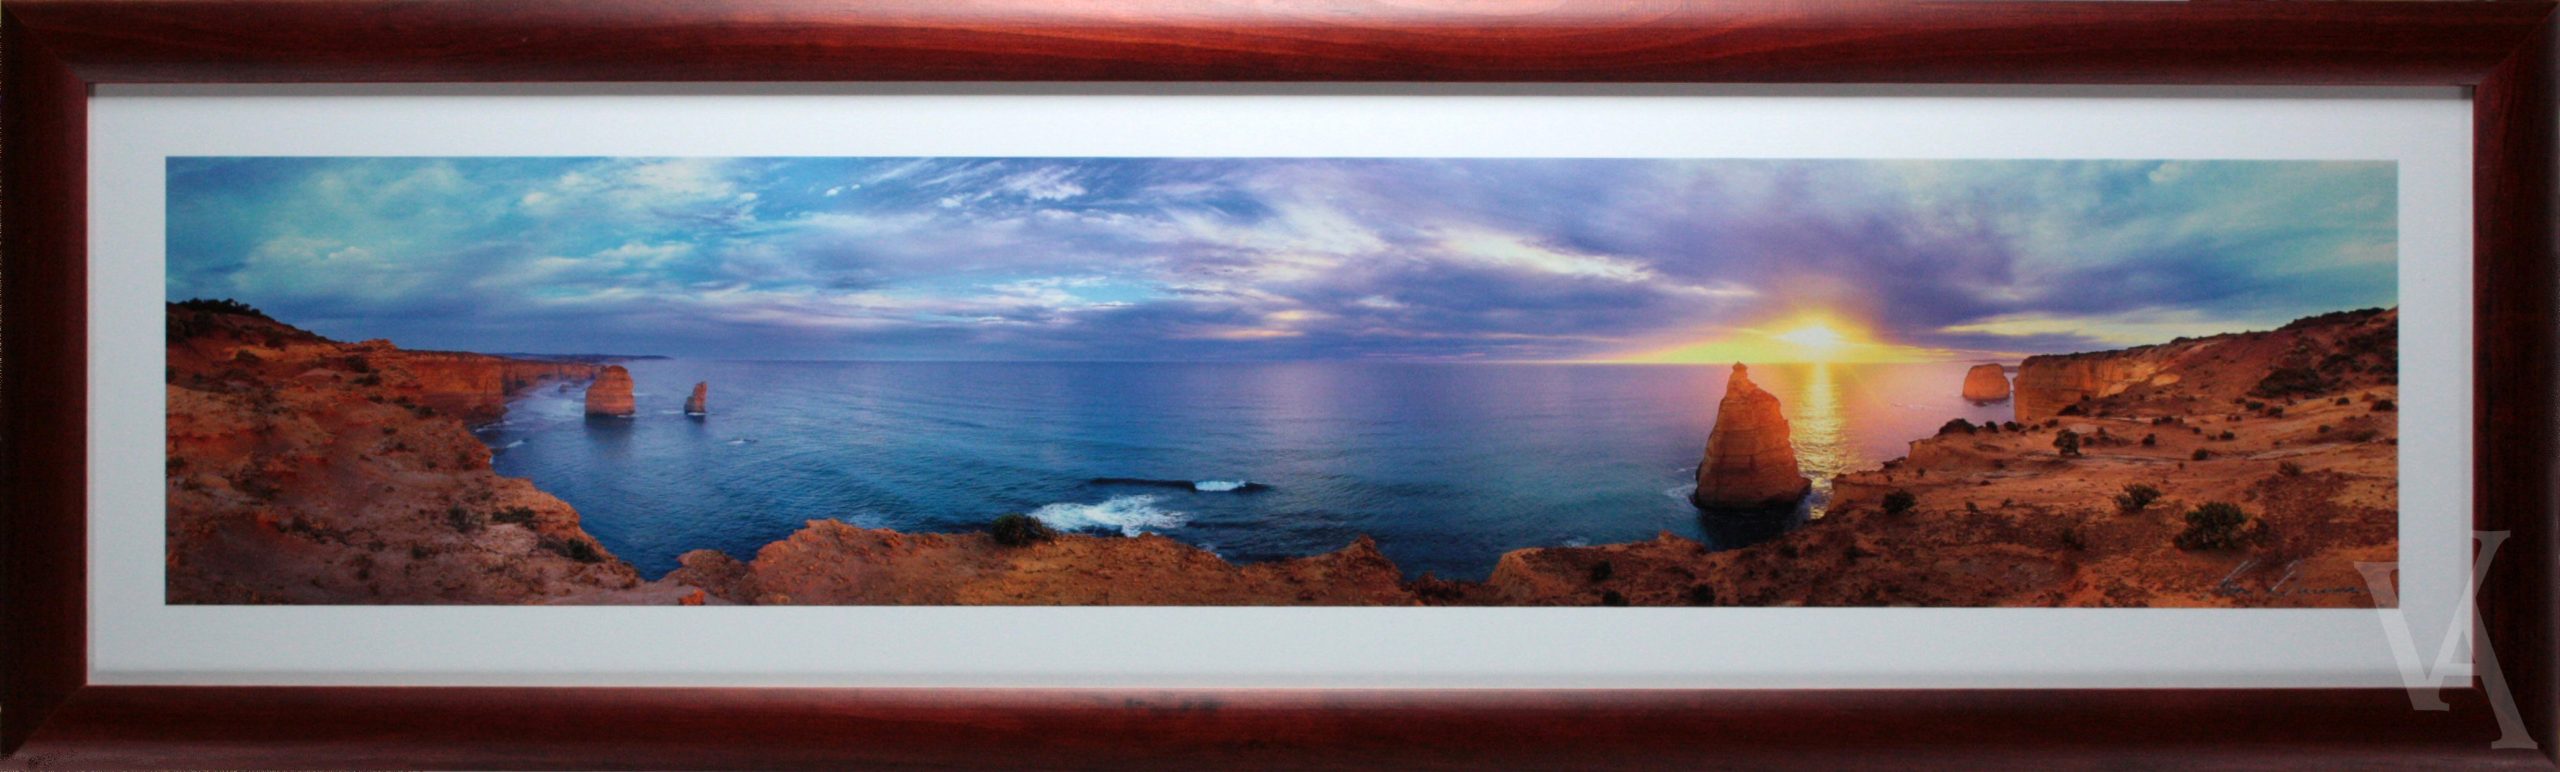 Ken Duncan Photography Framed Signature Series Art Print. Sunset 12 Apostles Panoramic Signed Photo.